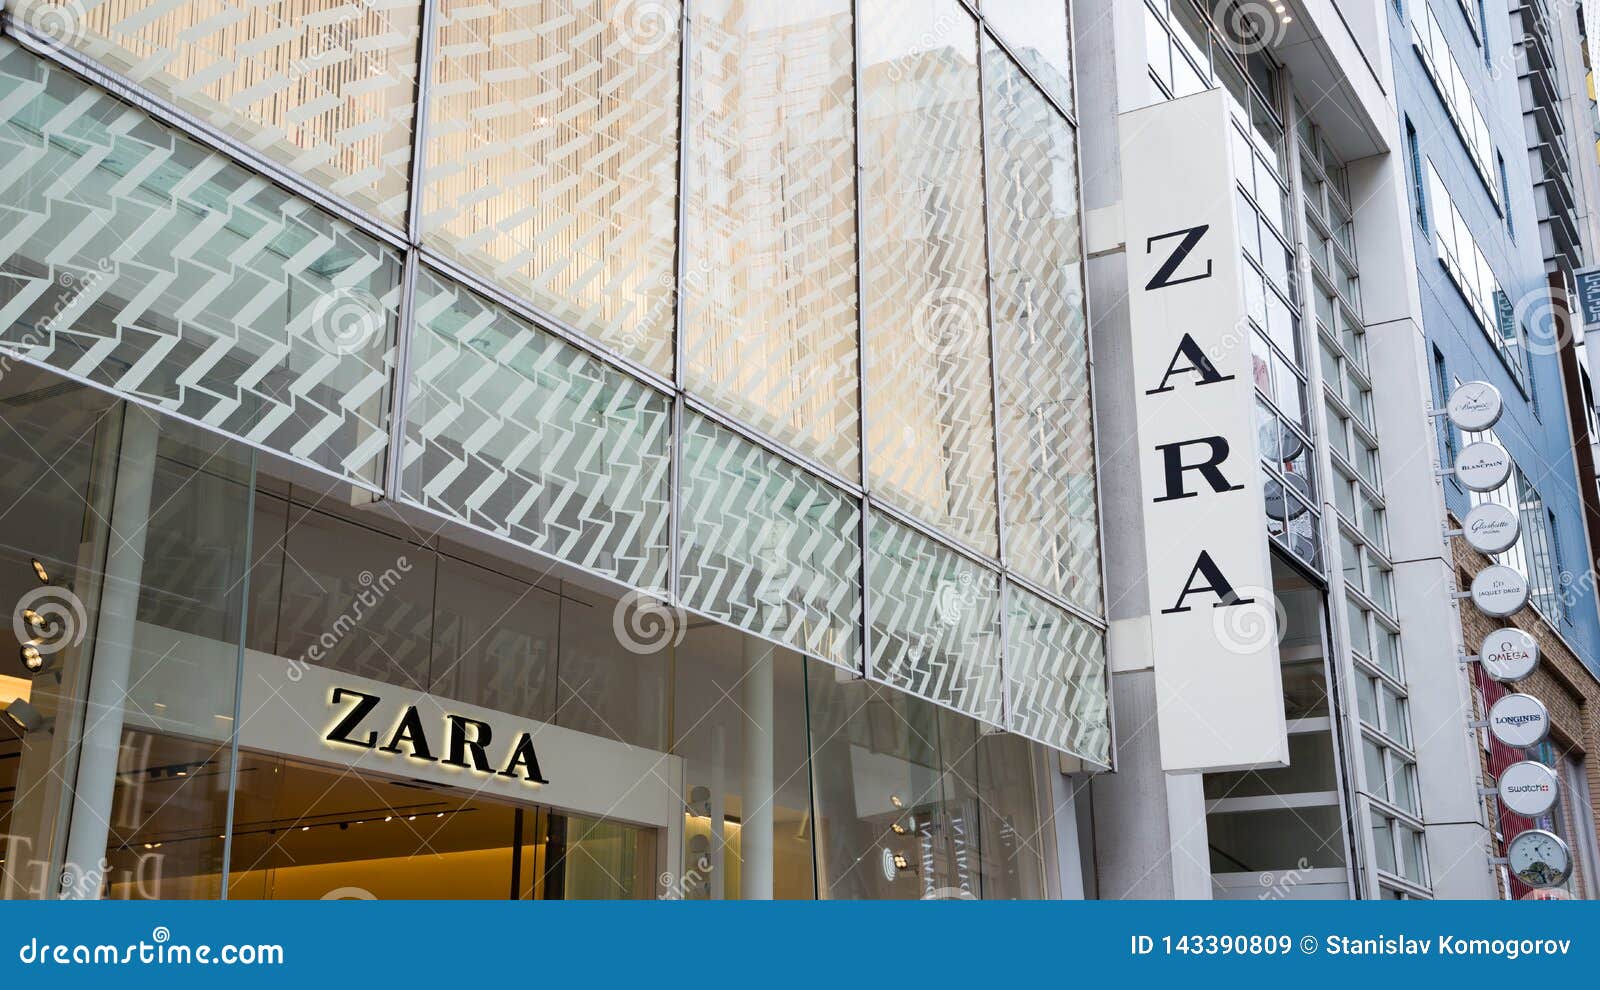 zara group companies